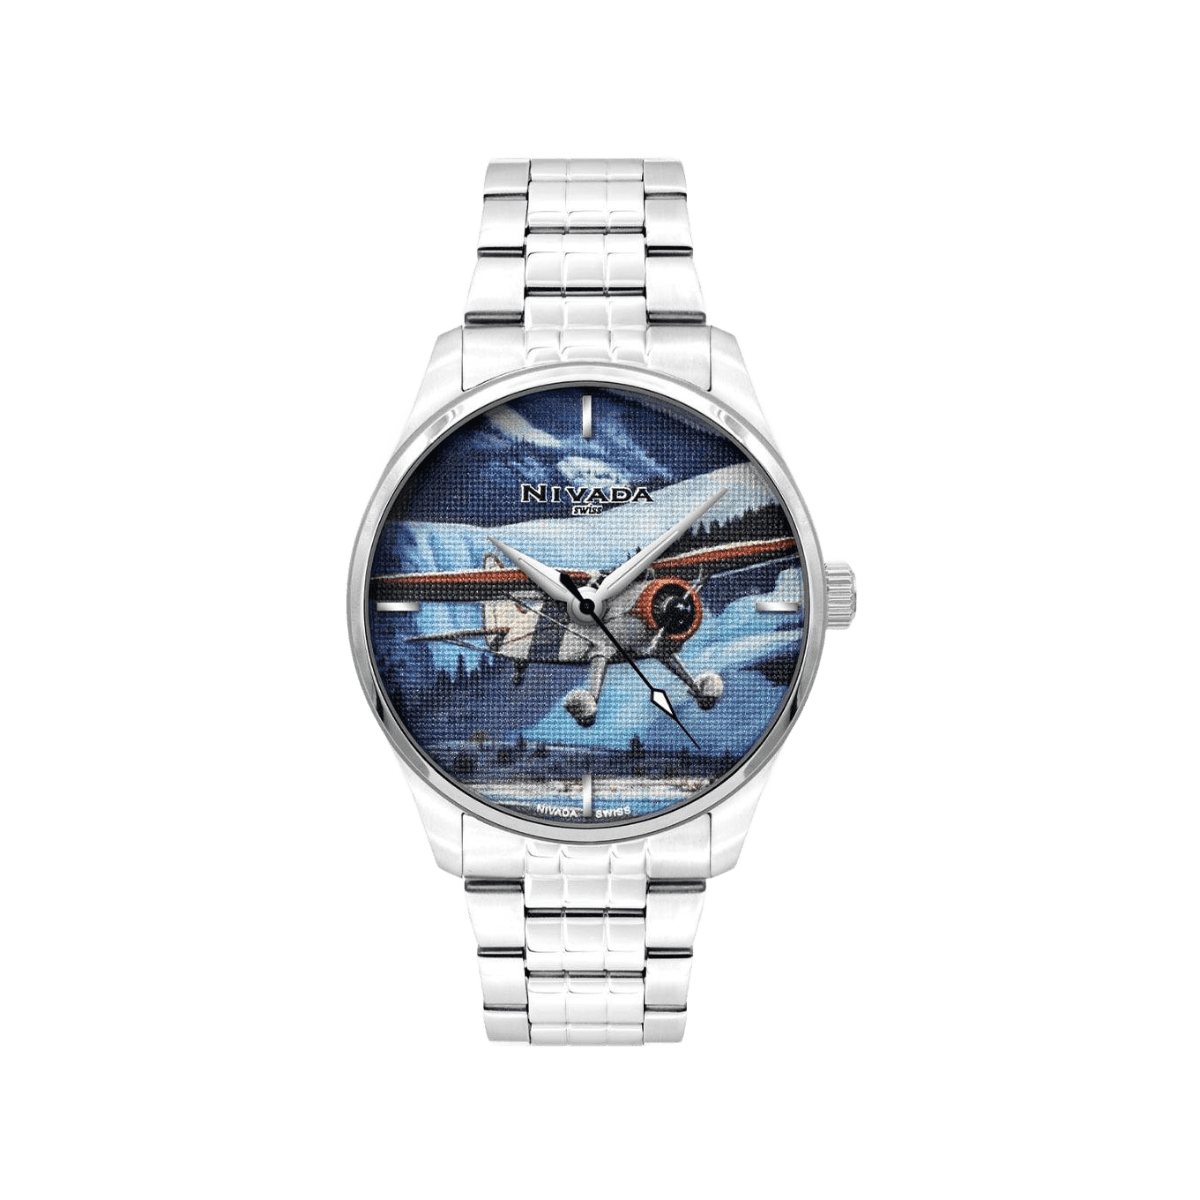 Air Collection - Reloj Nivada Swiss